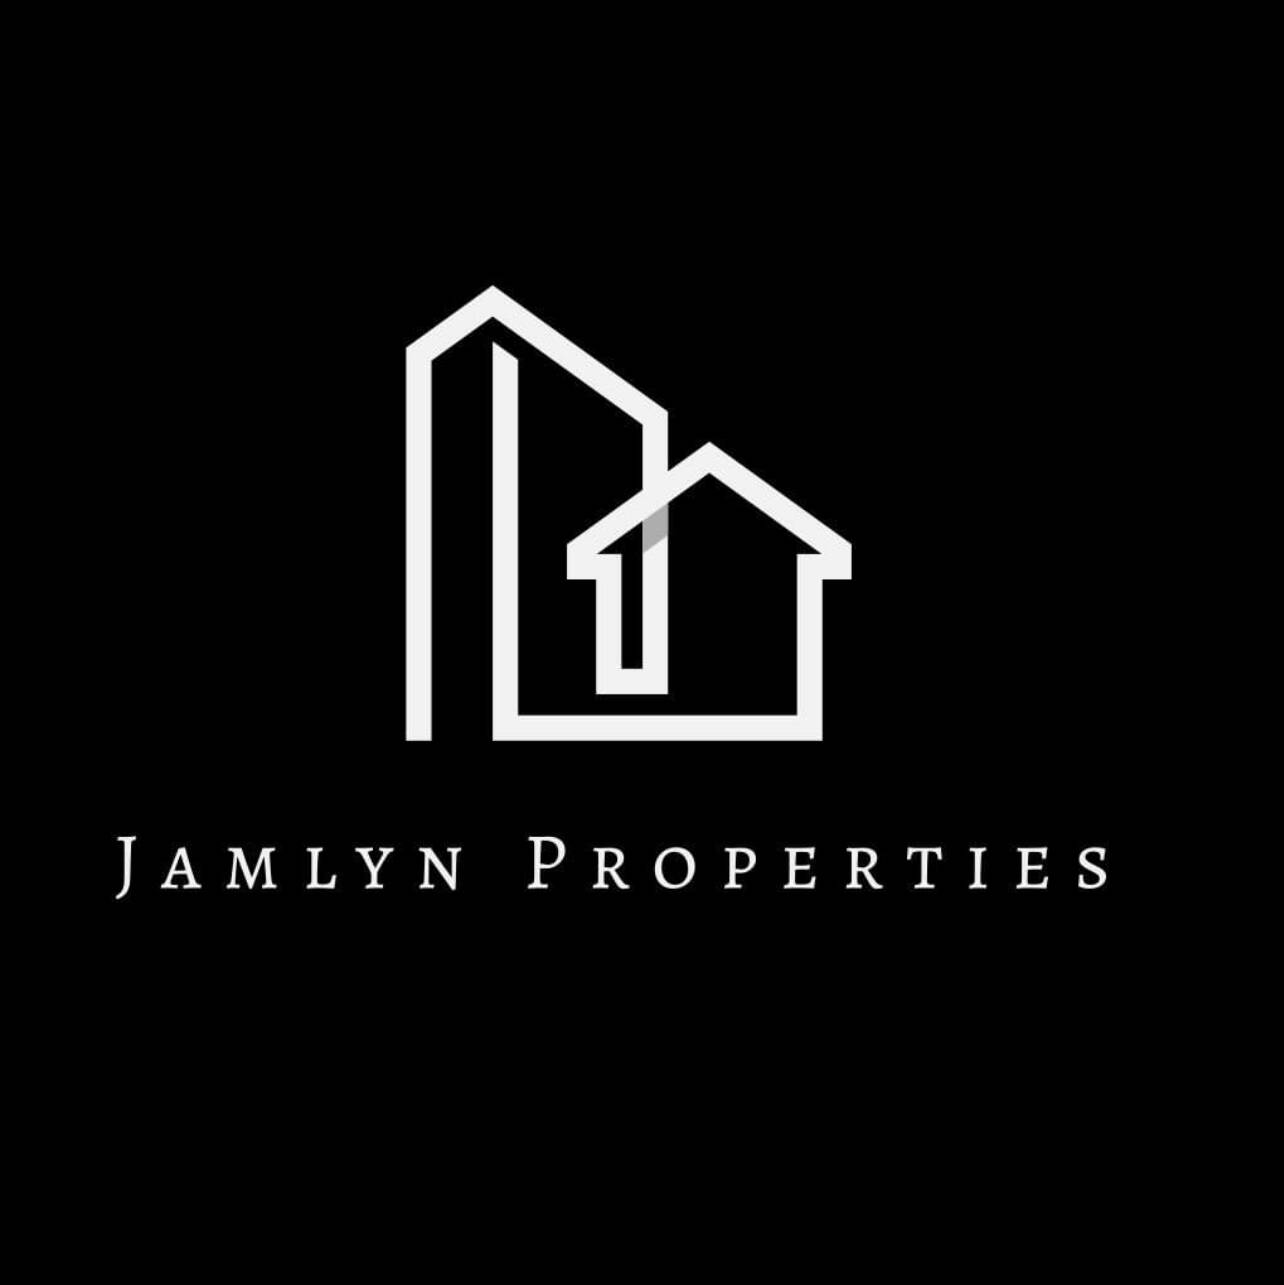 Jamlyn Properties